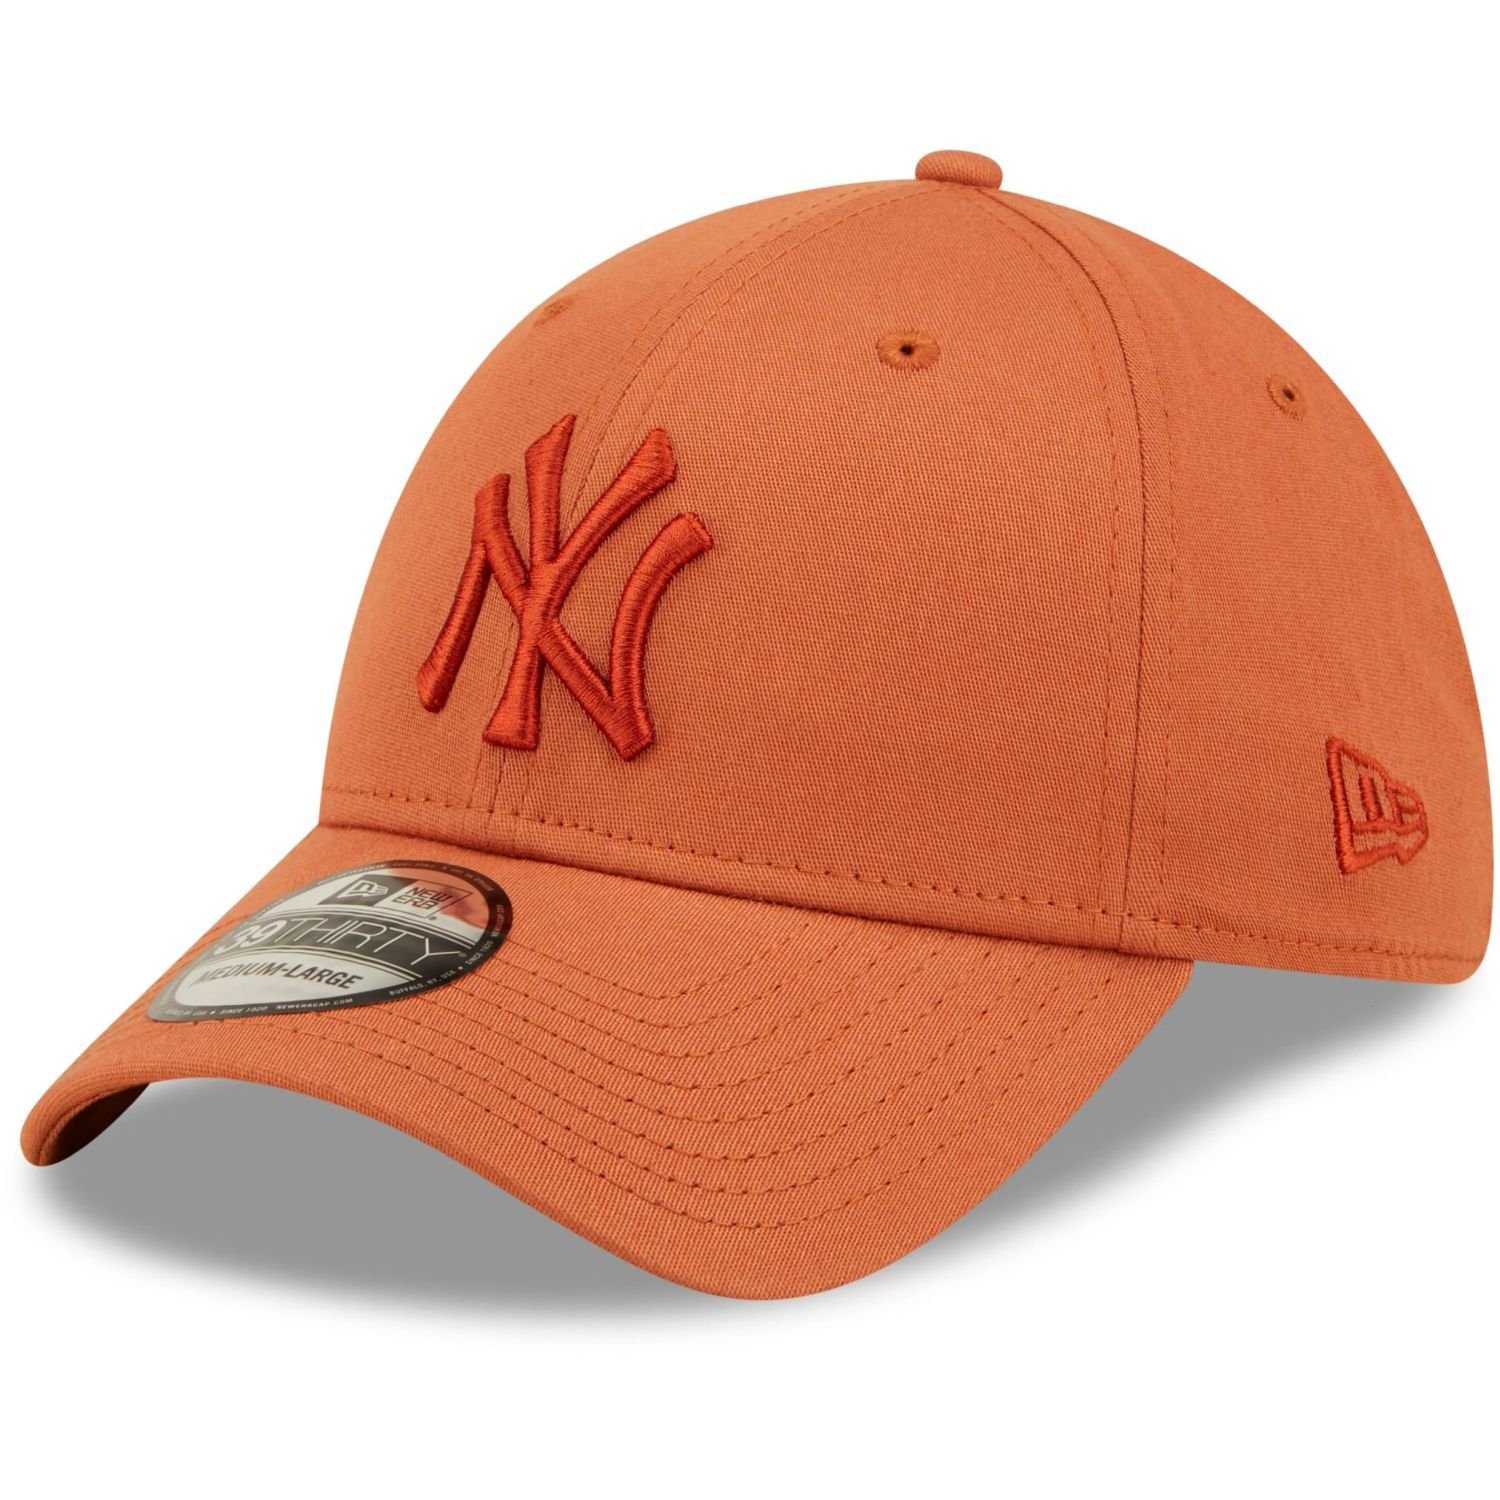 New Era Flex Cap 39Thirty York New Yankees orange Stretch